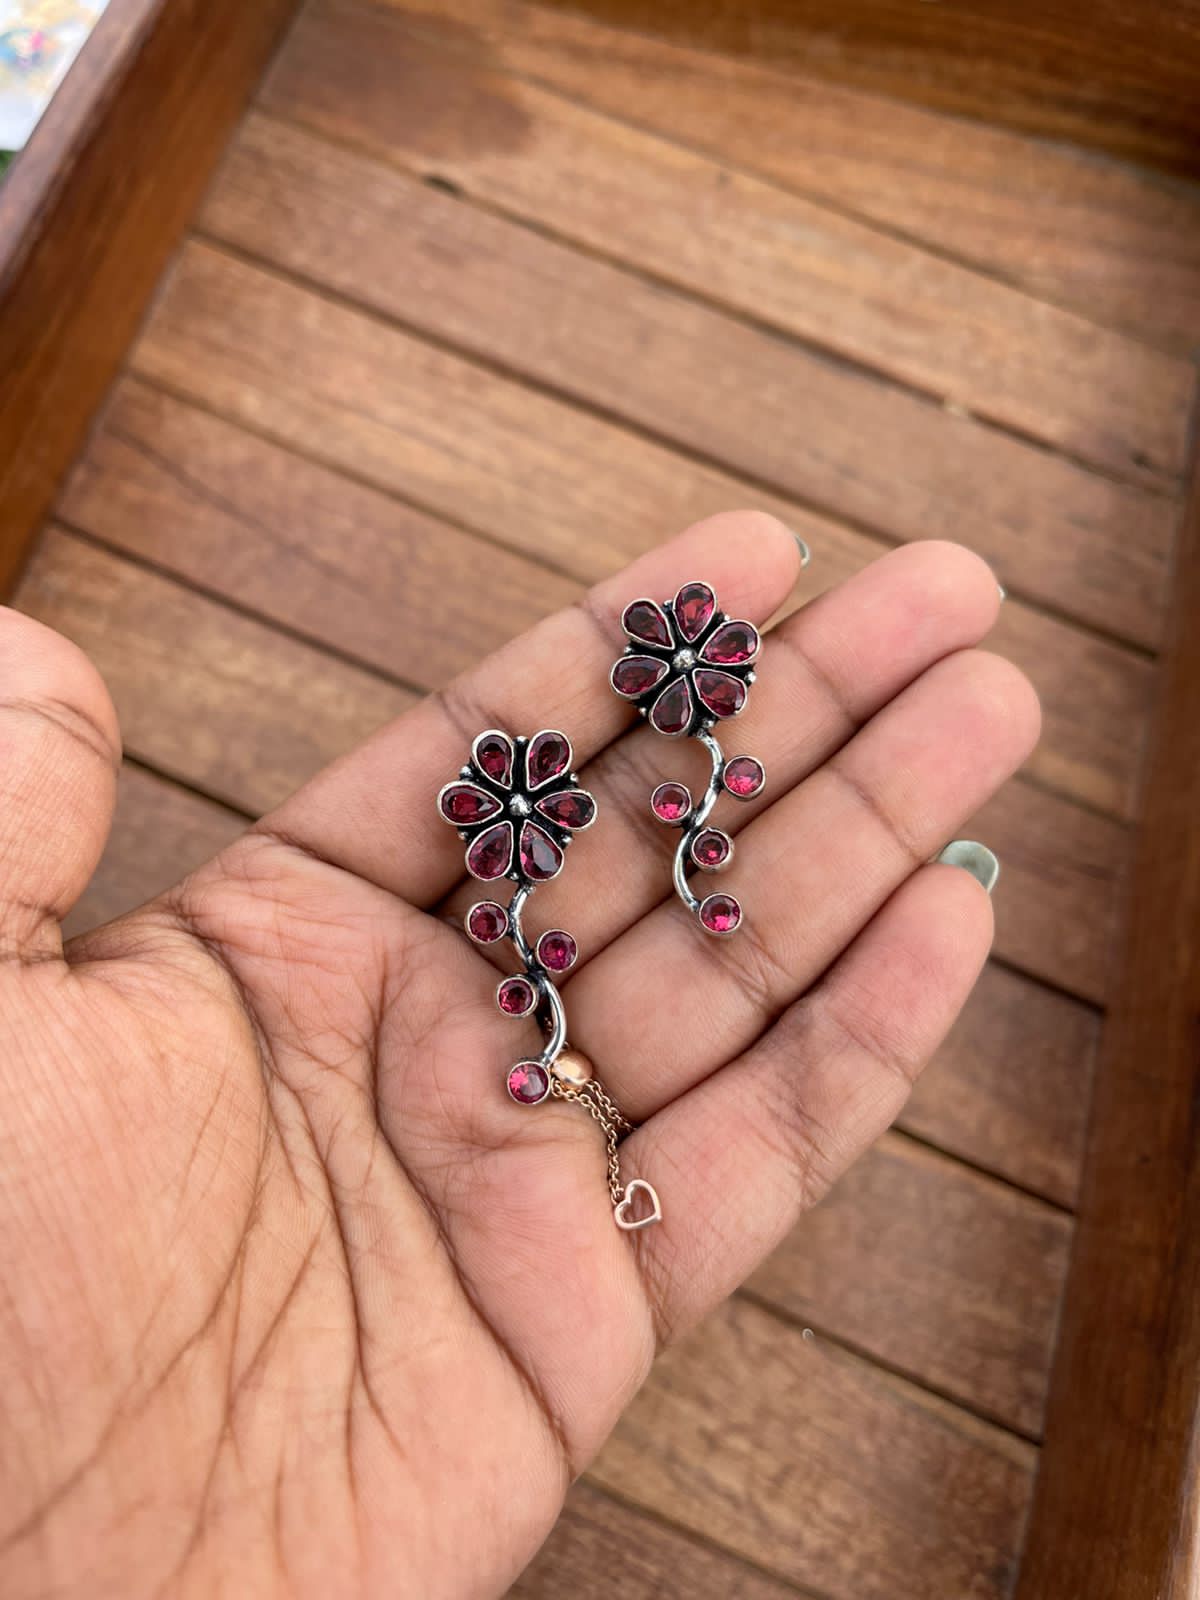 Flower stem AD stone earrings - Alluring Accessories